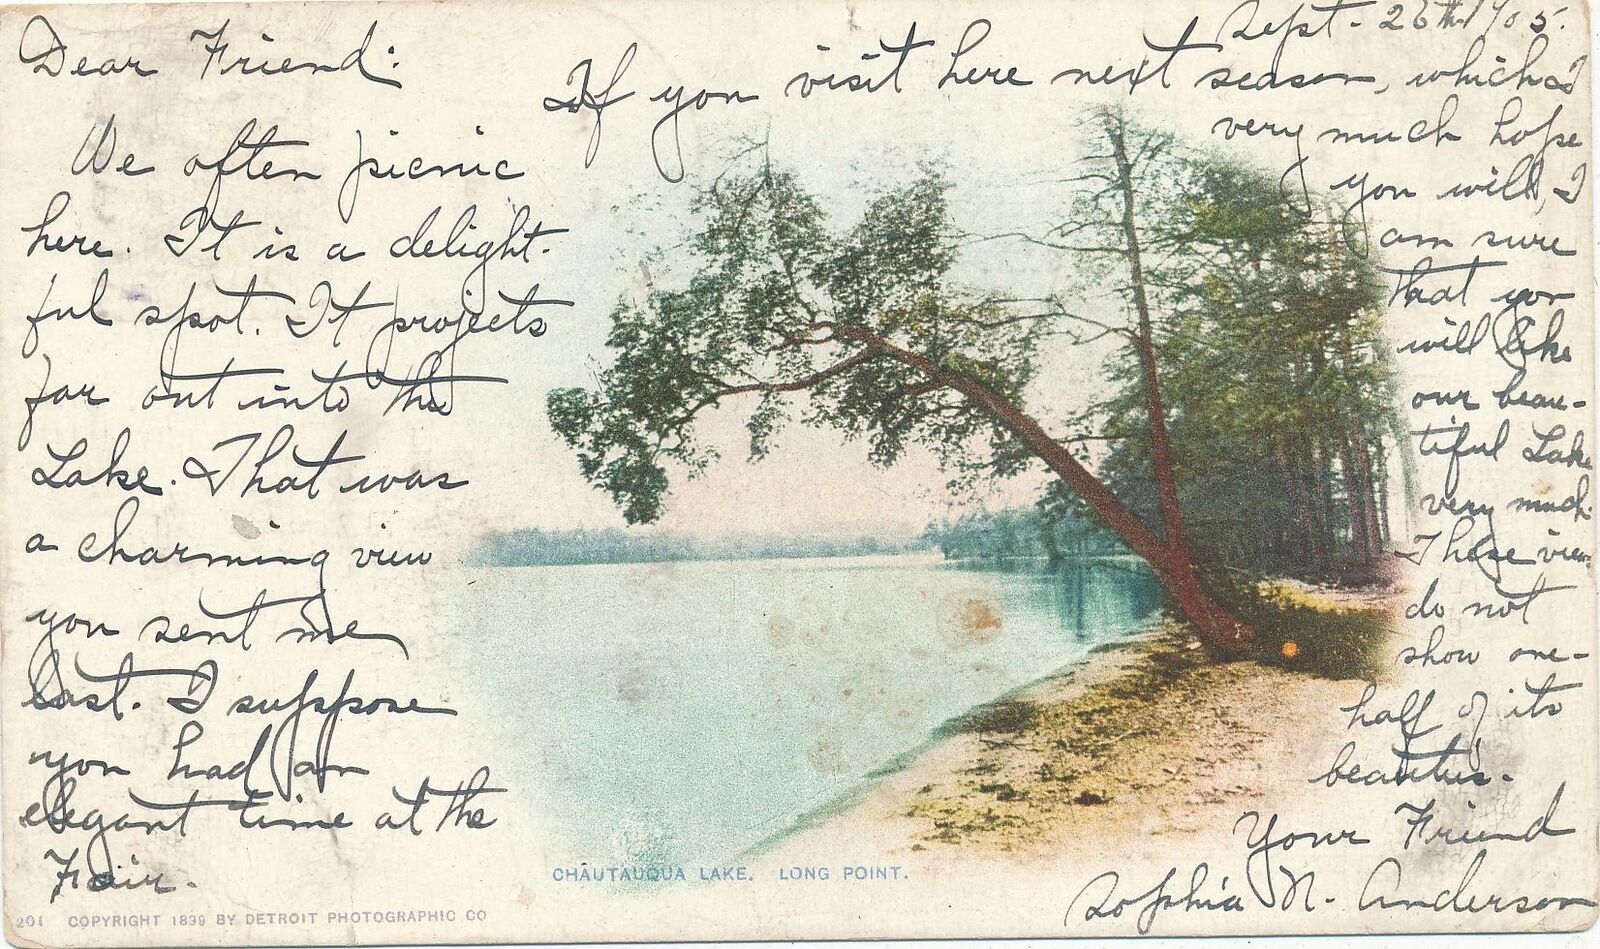 BEMIS POINT NY - Chautauqua Lake Long Point Private Mailing Card